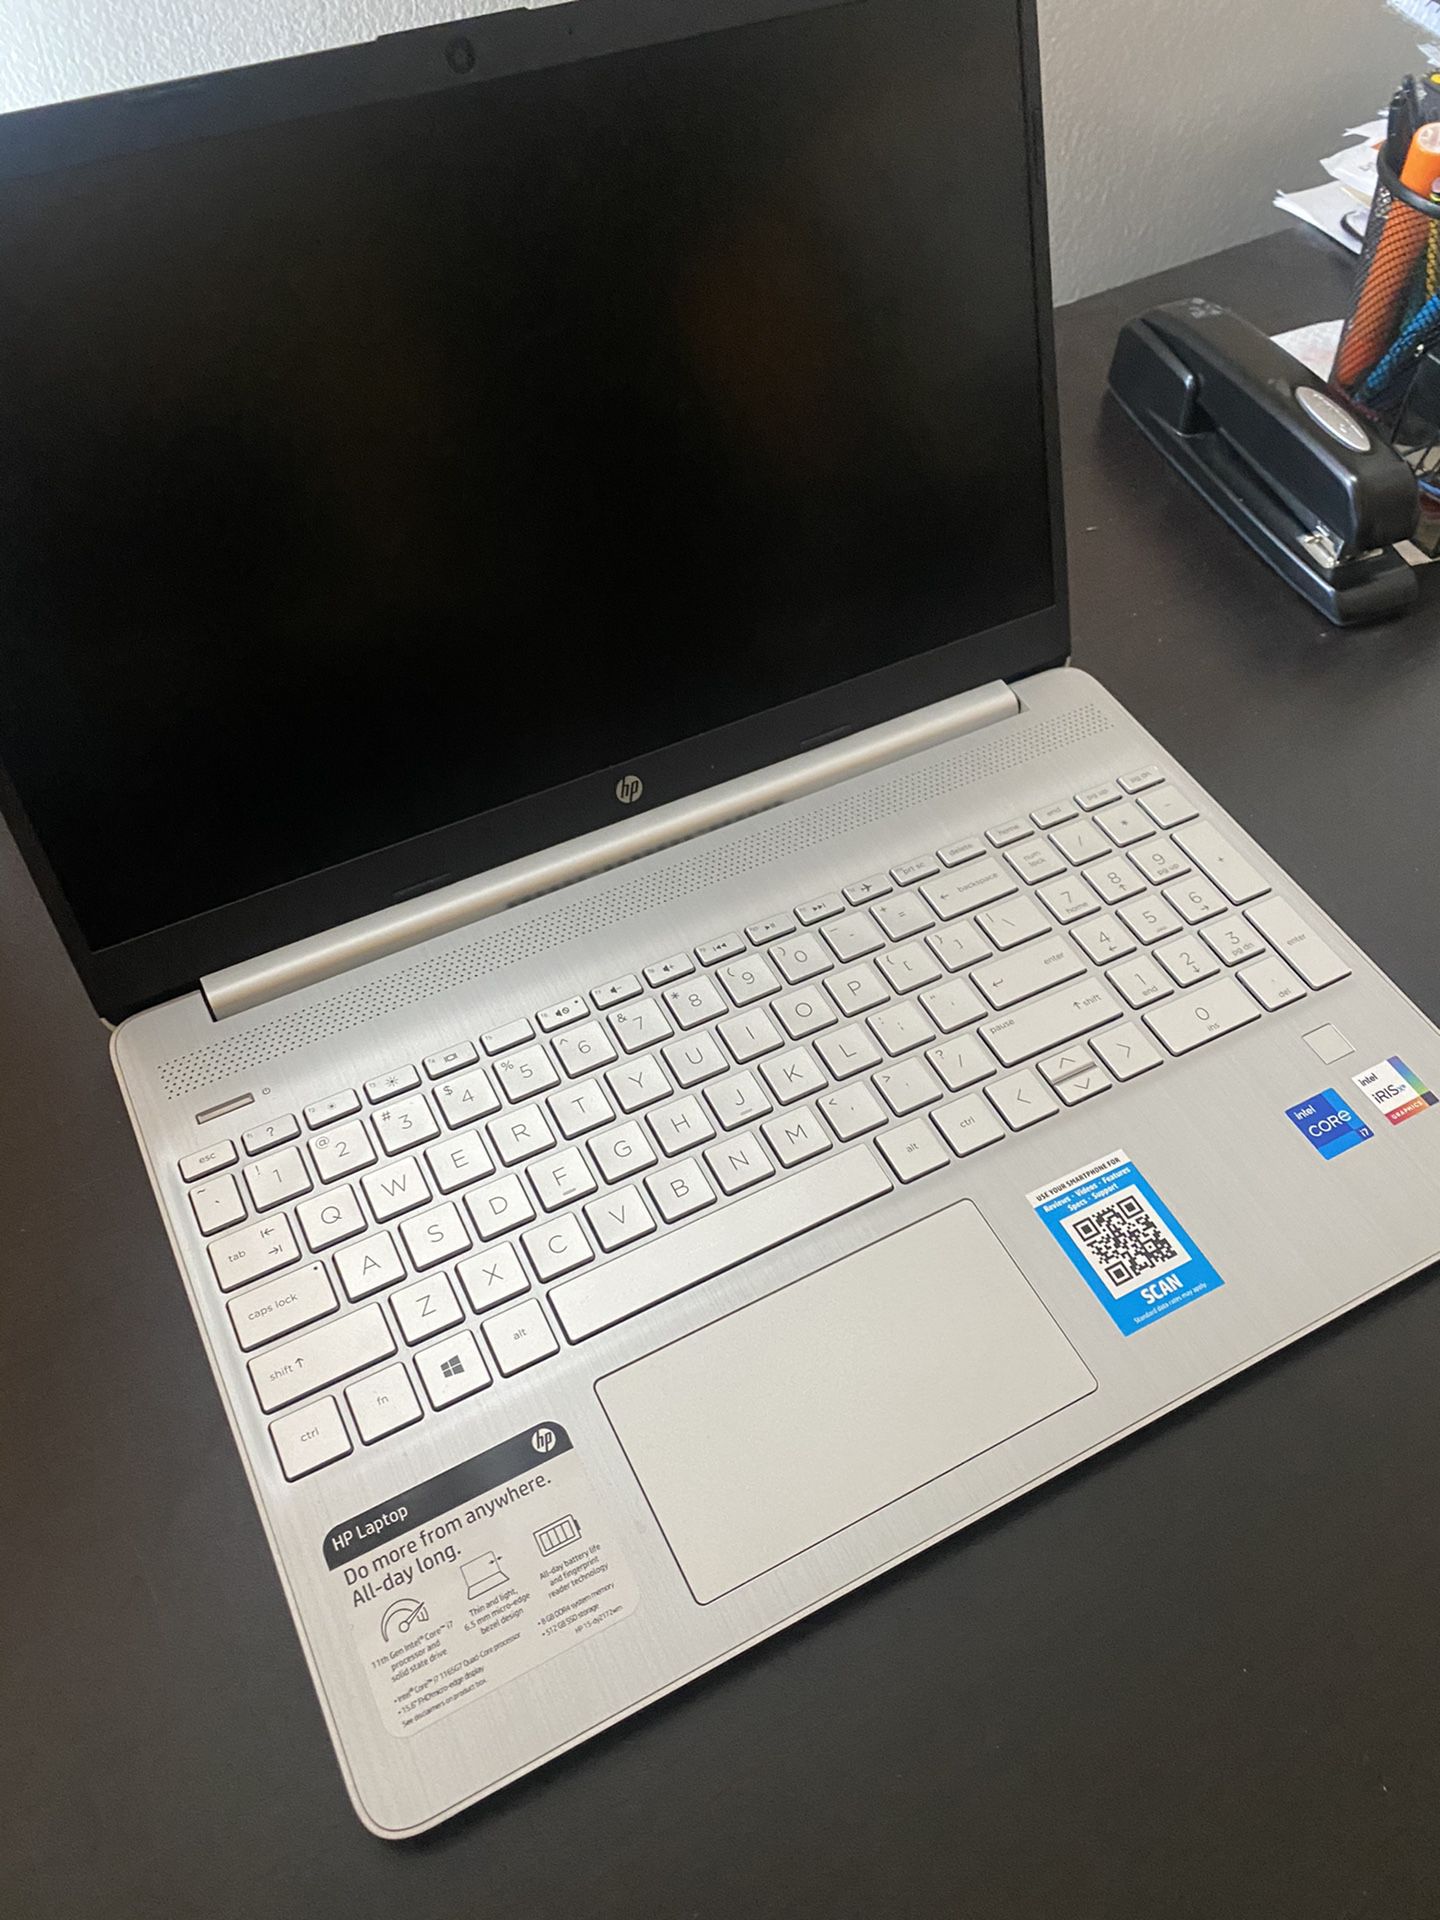 Lapto Hp Intel Core i7 - 15.6” FHD - WiFi + Bluetooth 